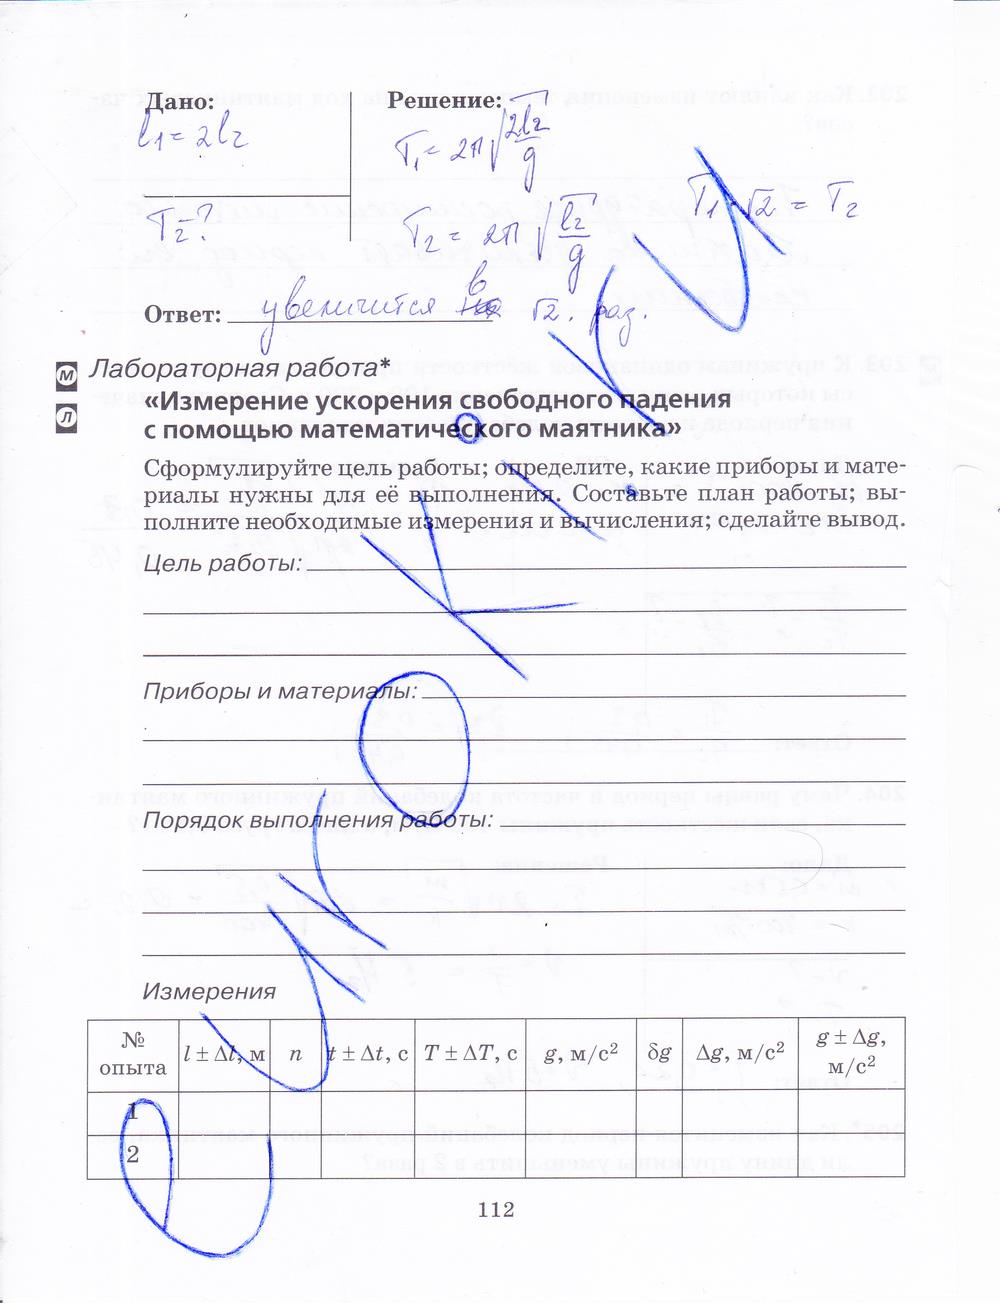 гдз 9 класс рабочая тетрадь страница 112 физика Пурышева, Важеевская, Чаругин